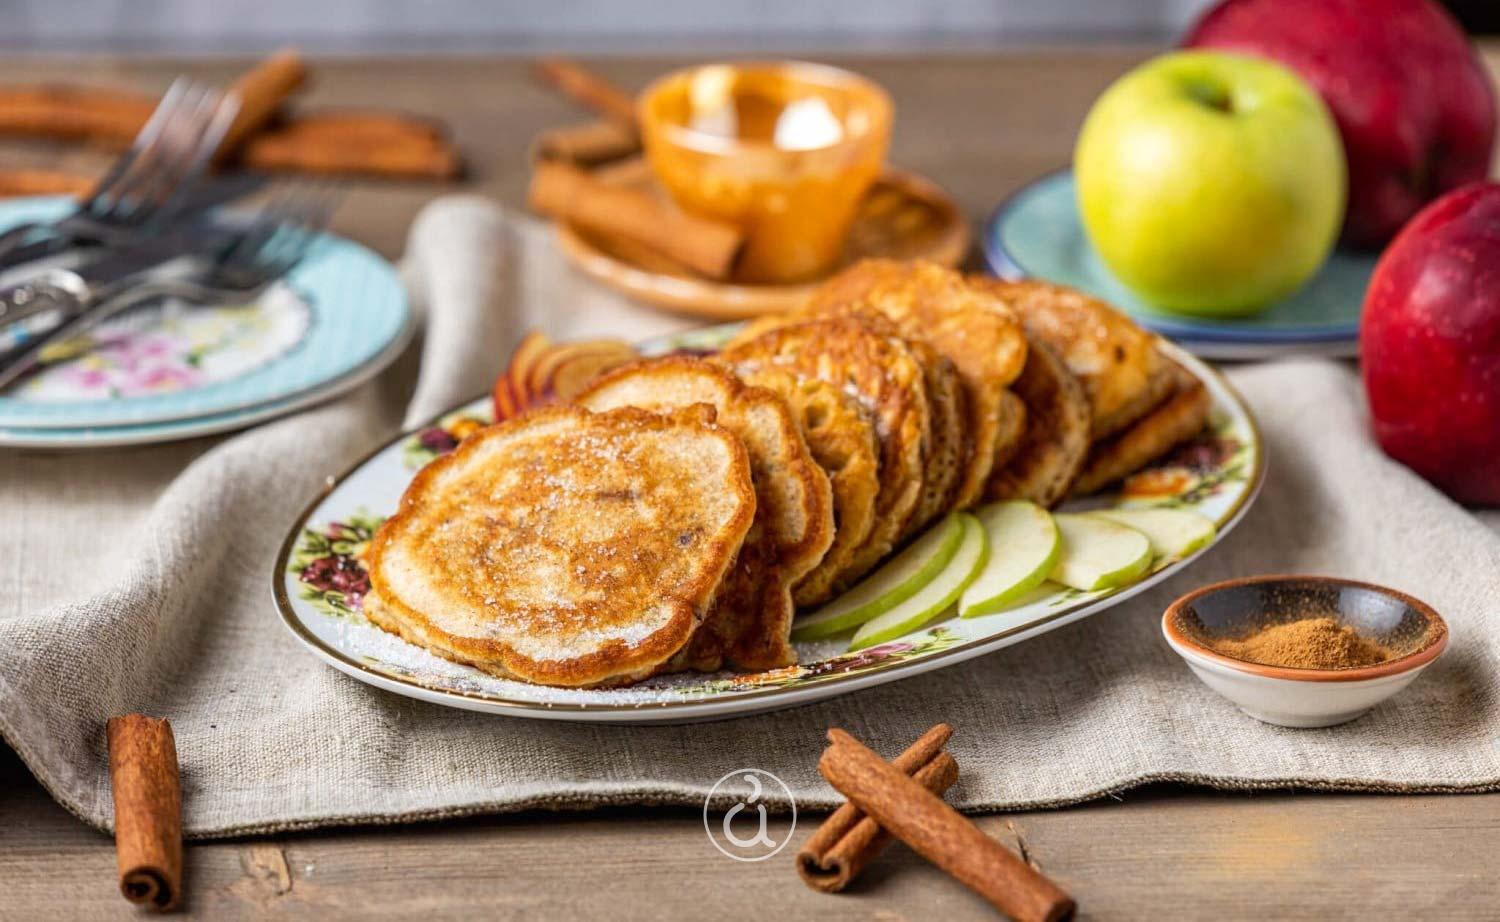 ROTD: Apple Pancakes